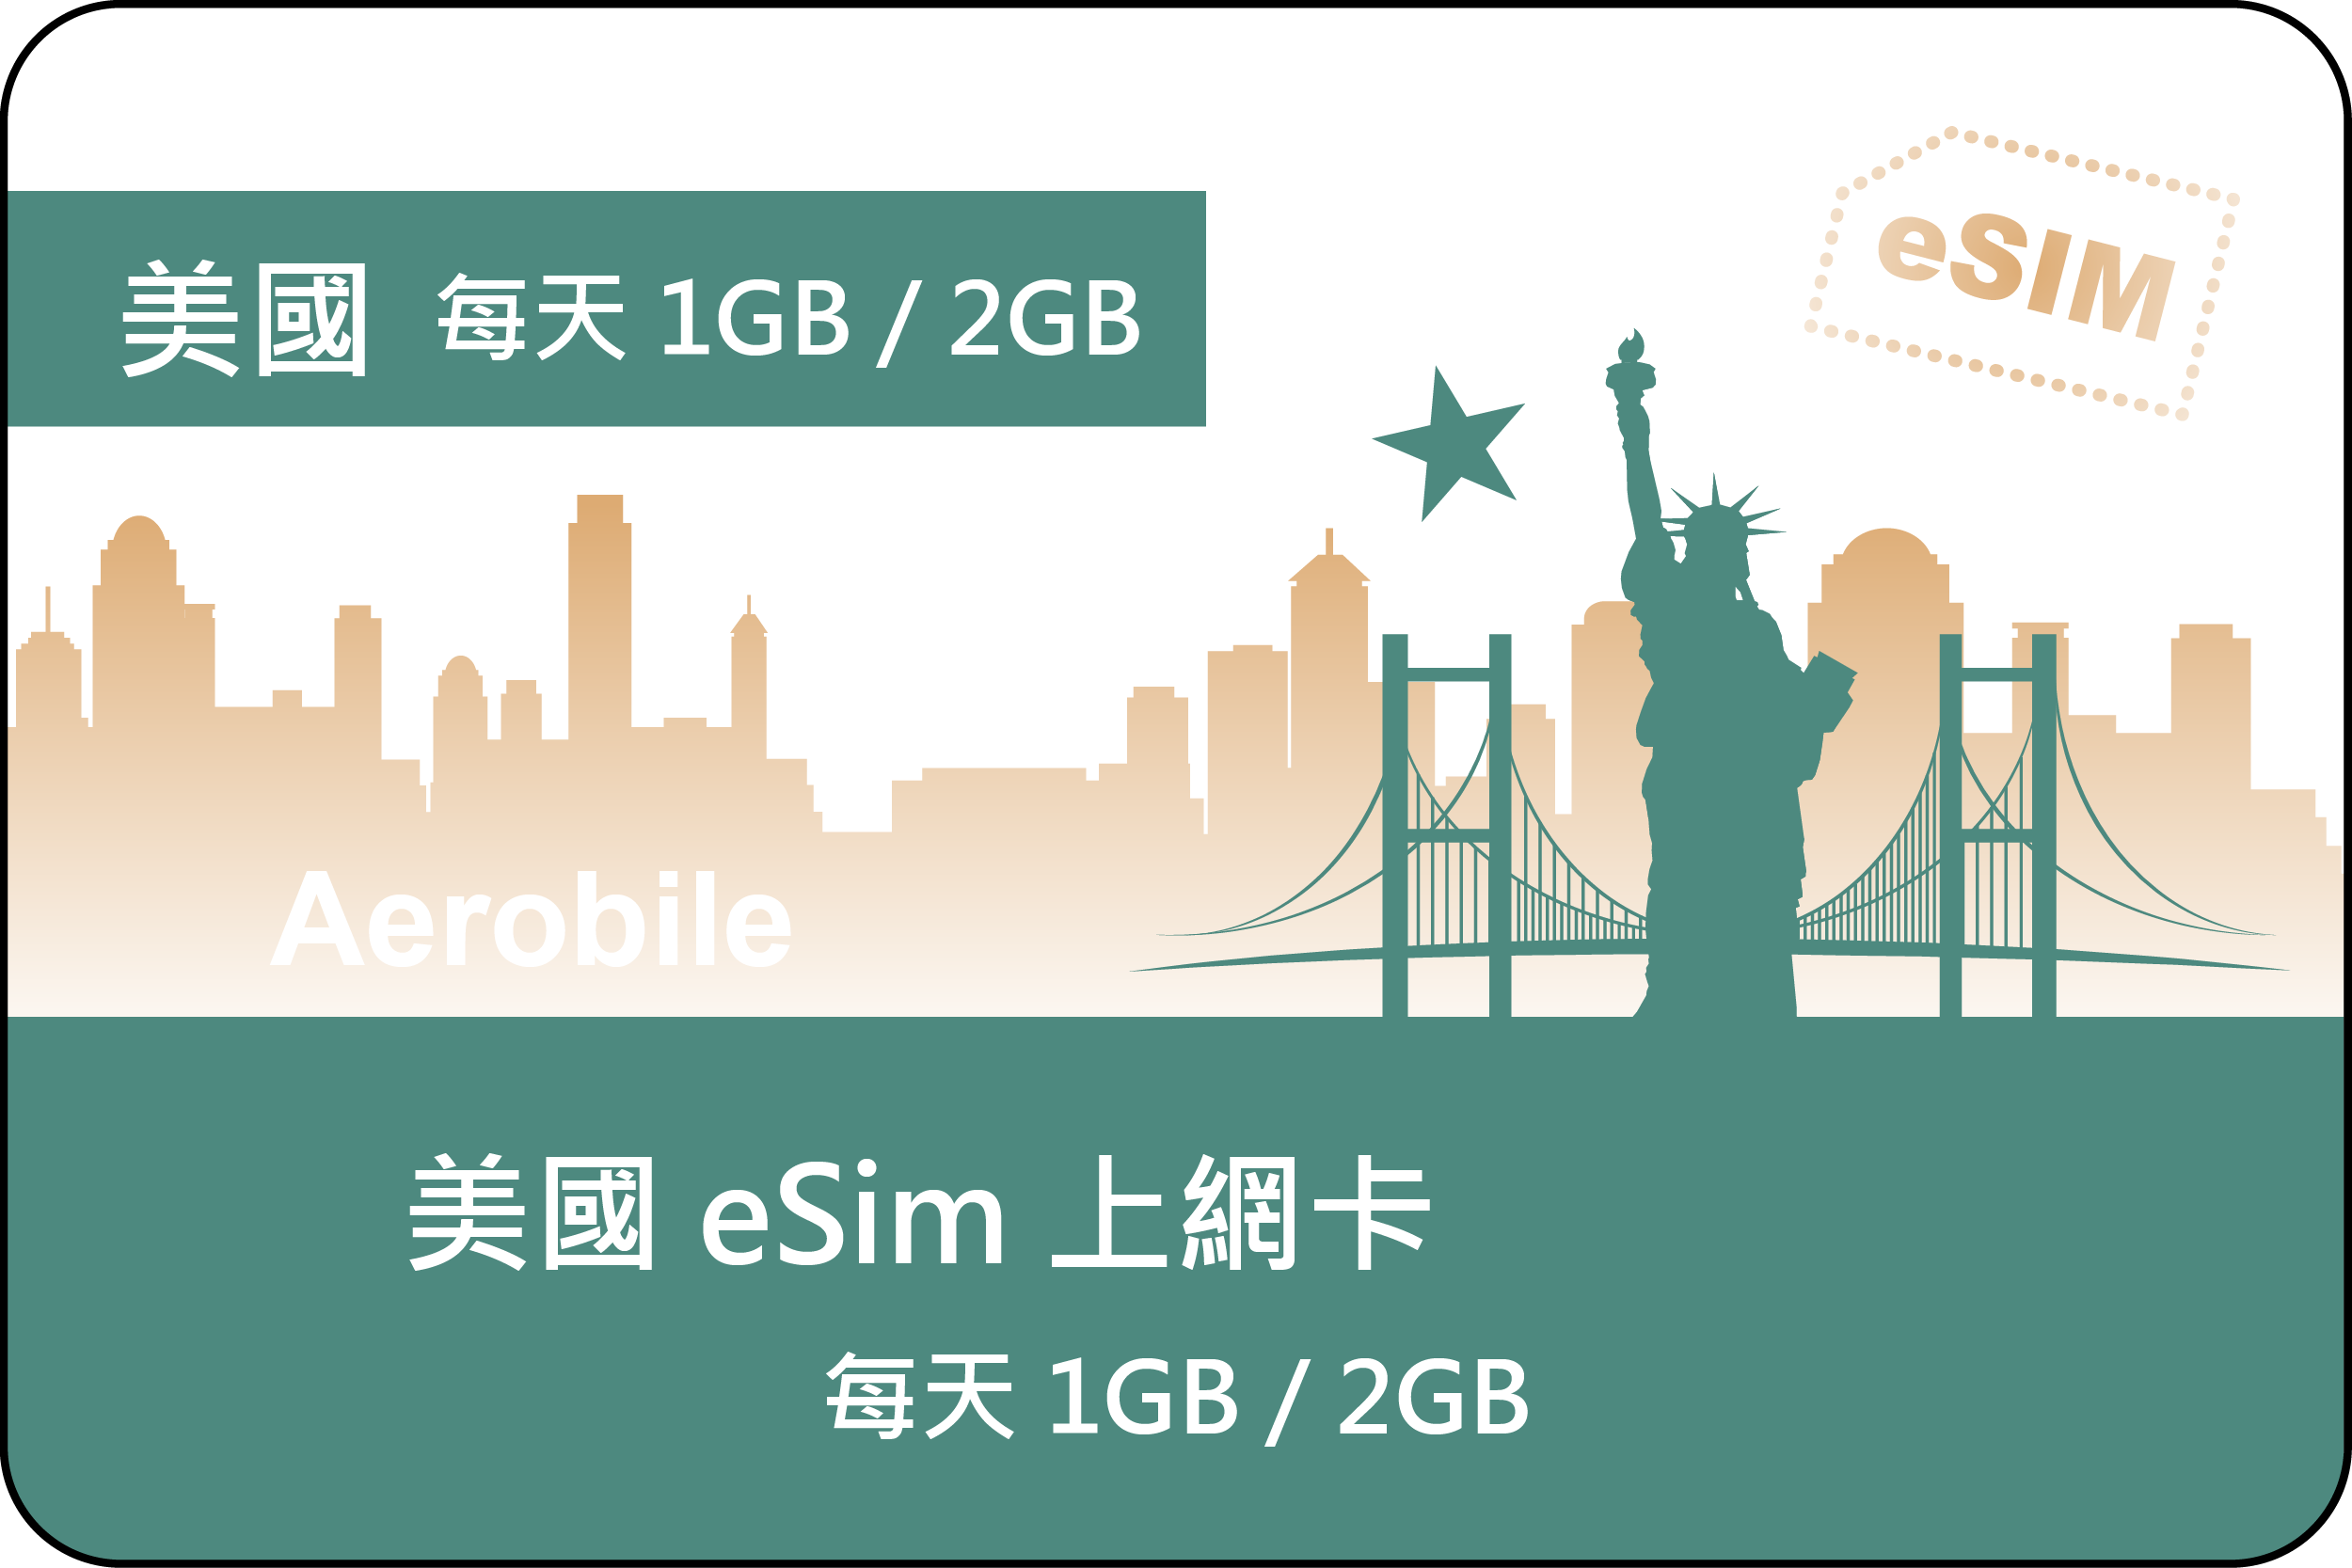 eSIM(美國)飛鷹卡每天1GB/2GB純上網無門號，可熱點(i)